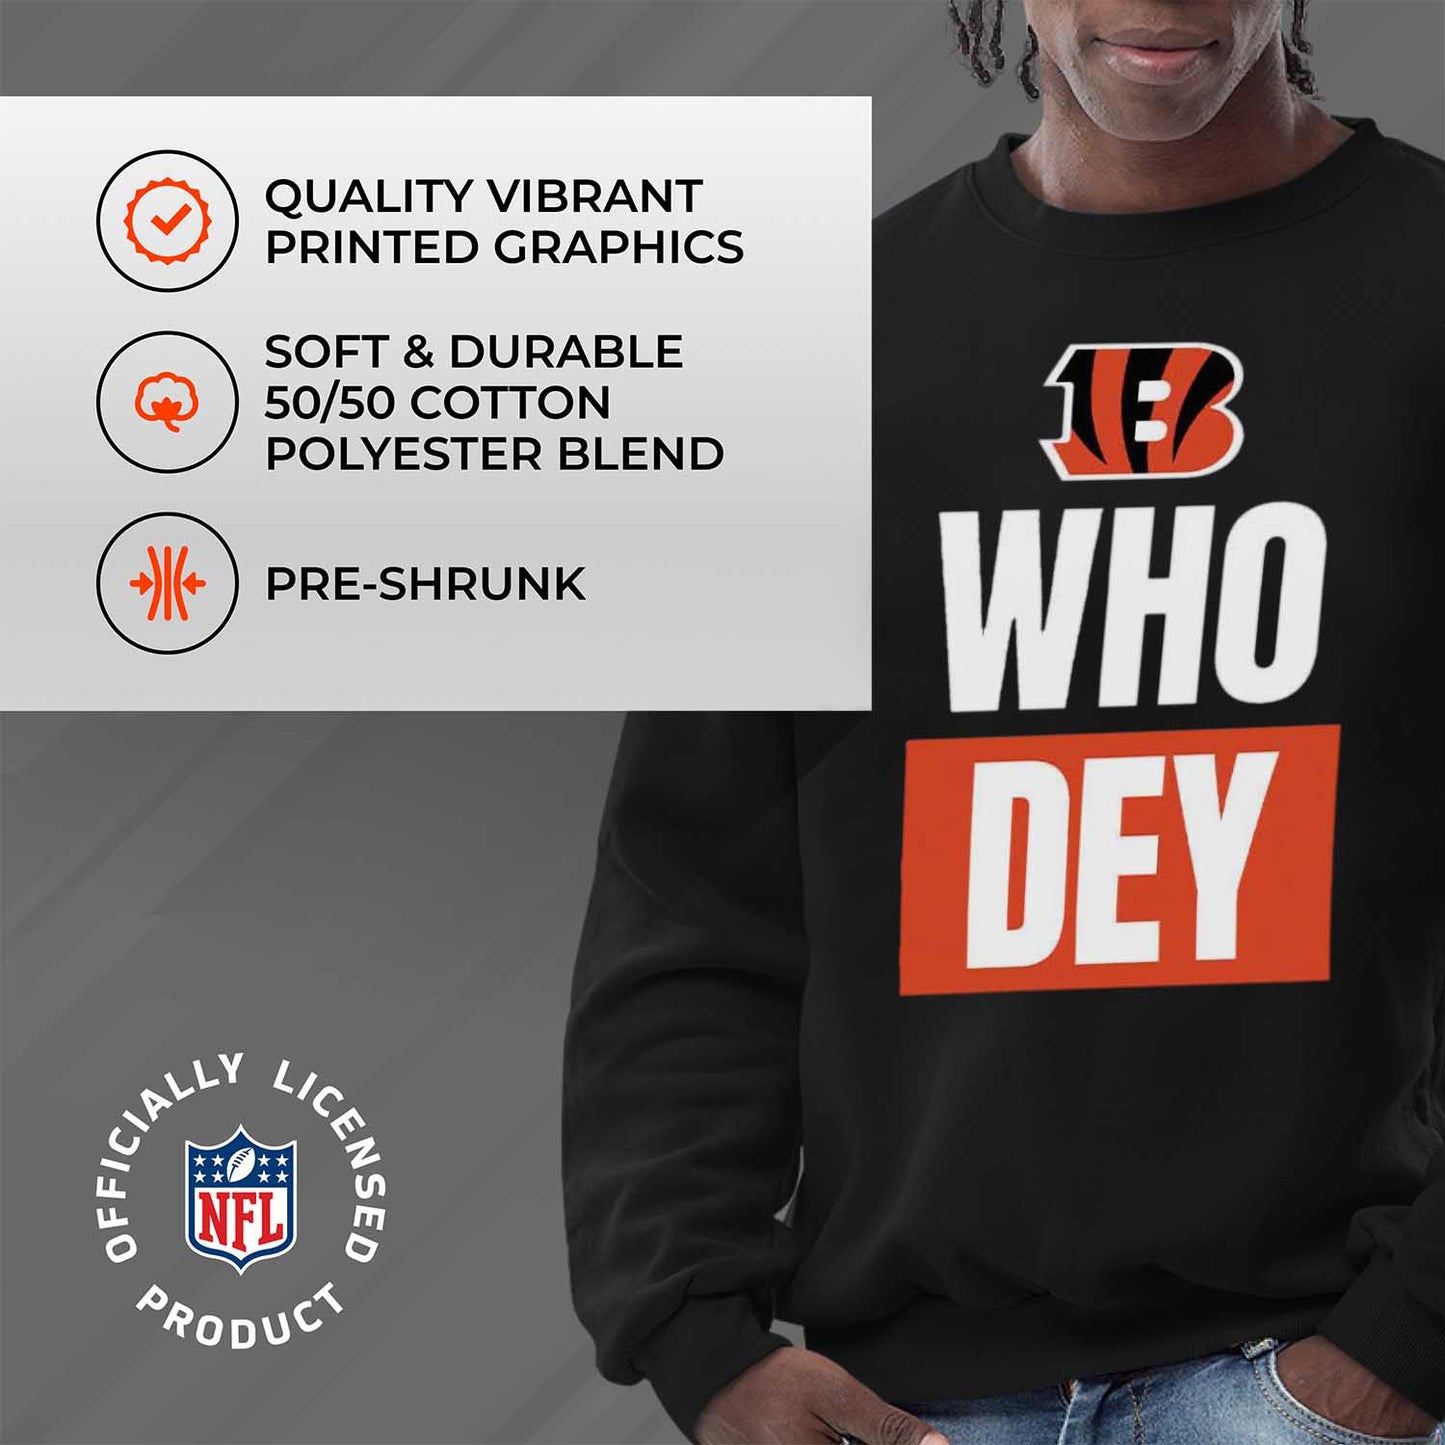 Cincinnati Bengals NFL Adult Slogan Crewneck Sweatshirt - Black